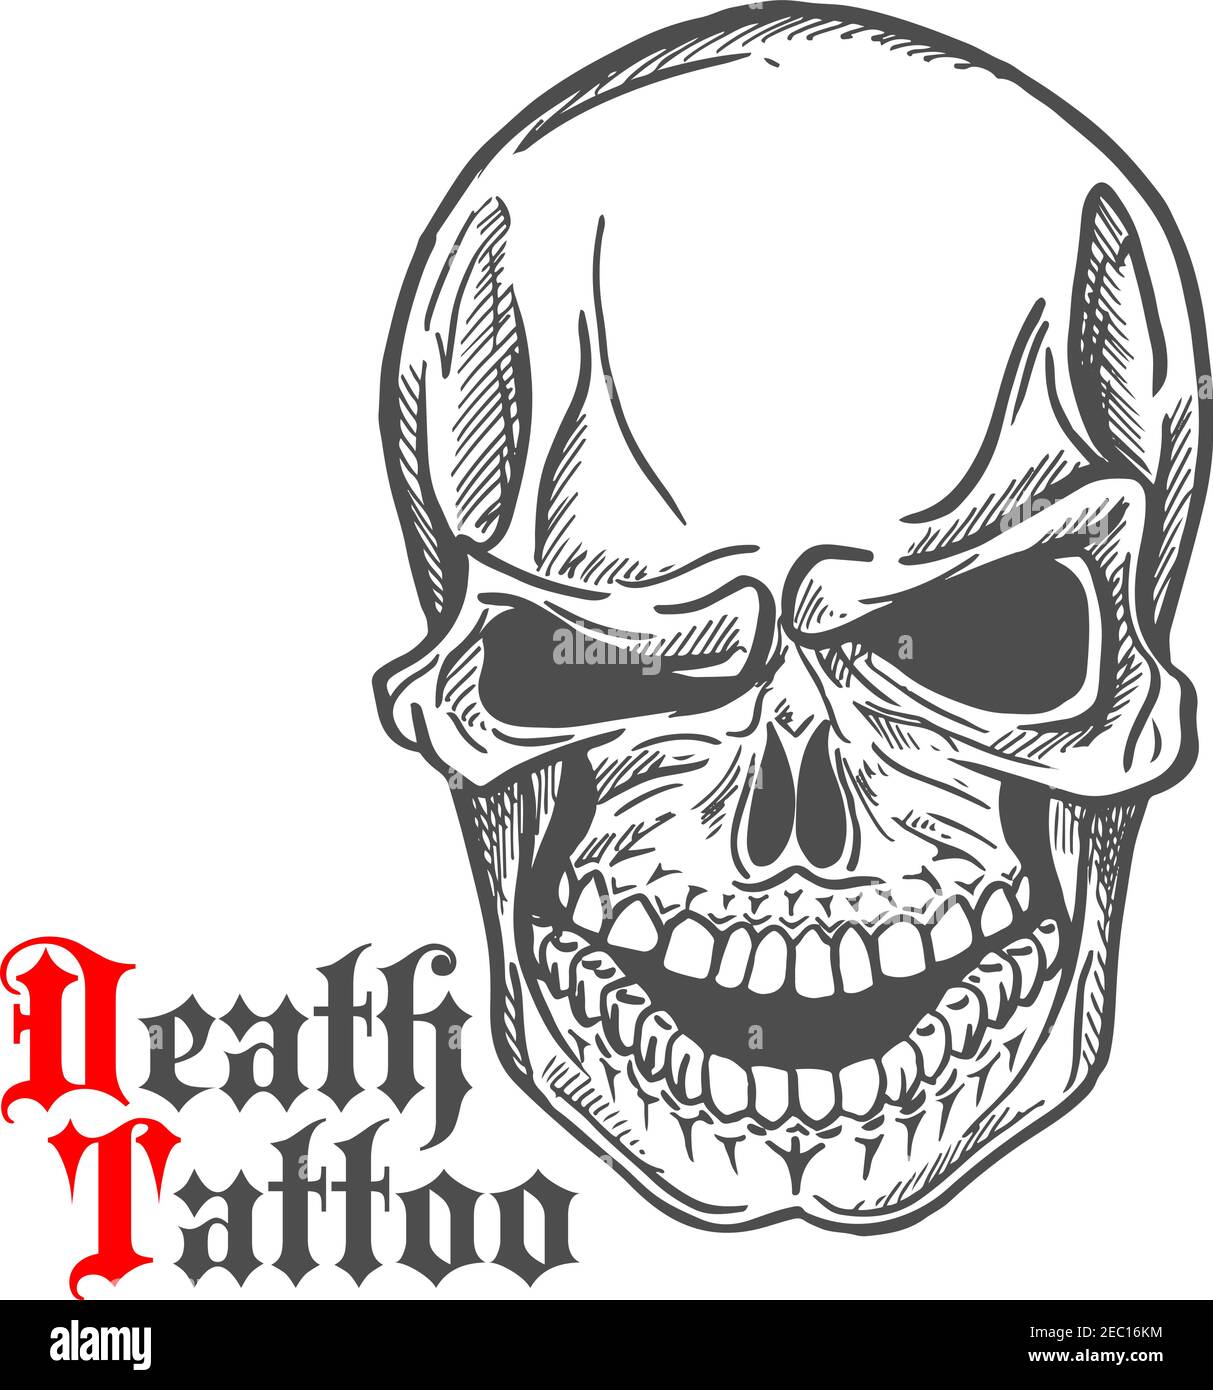 How to draw a skull tattoo   CrewSkull